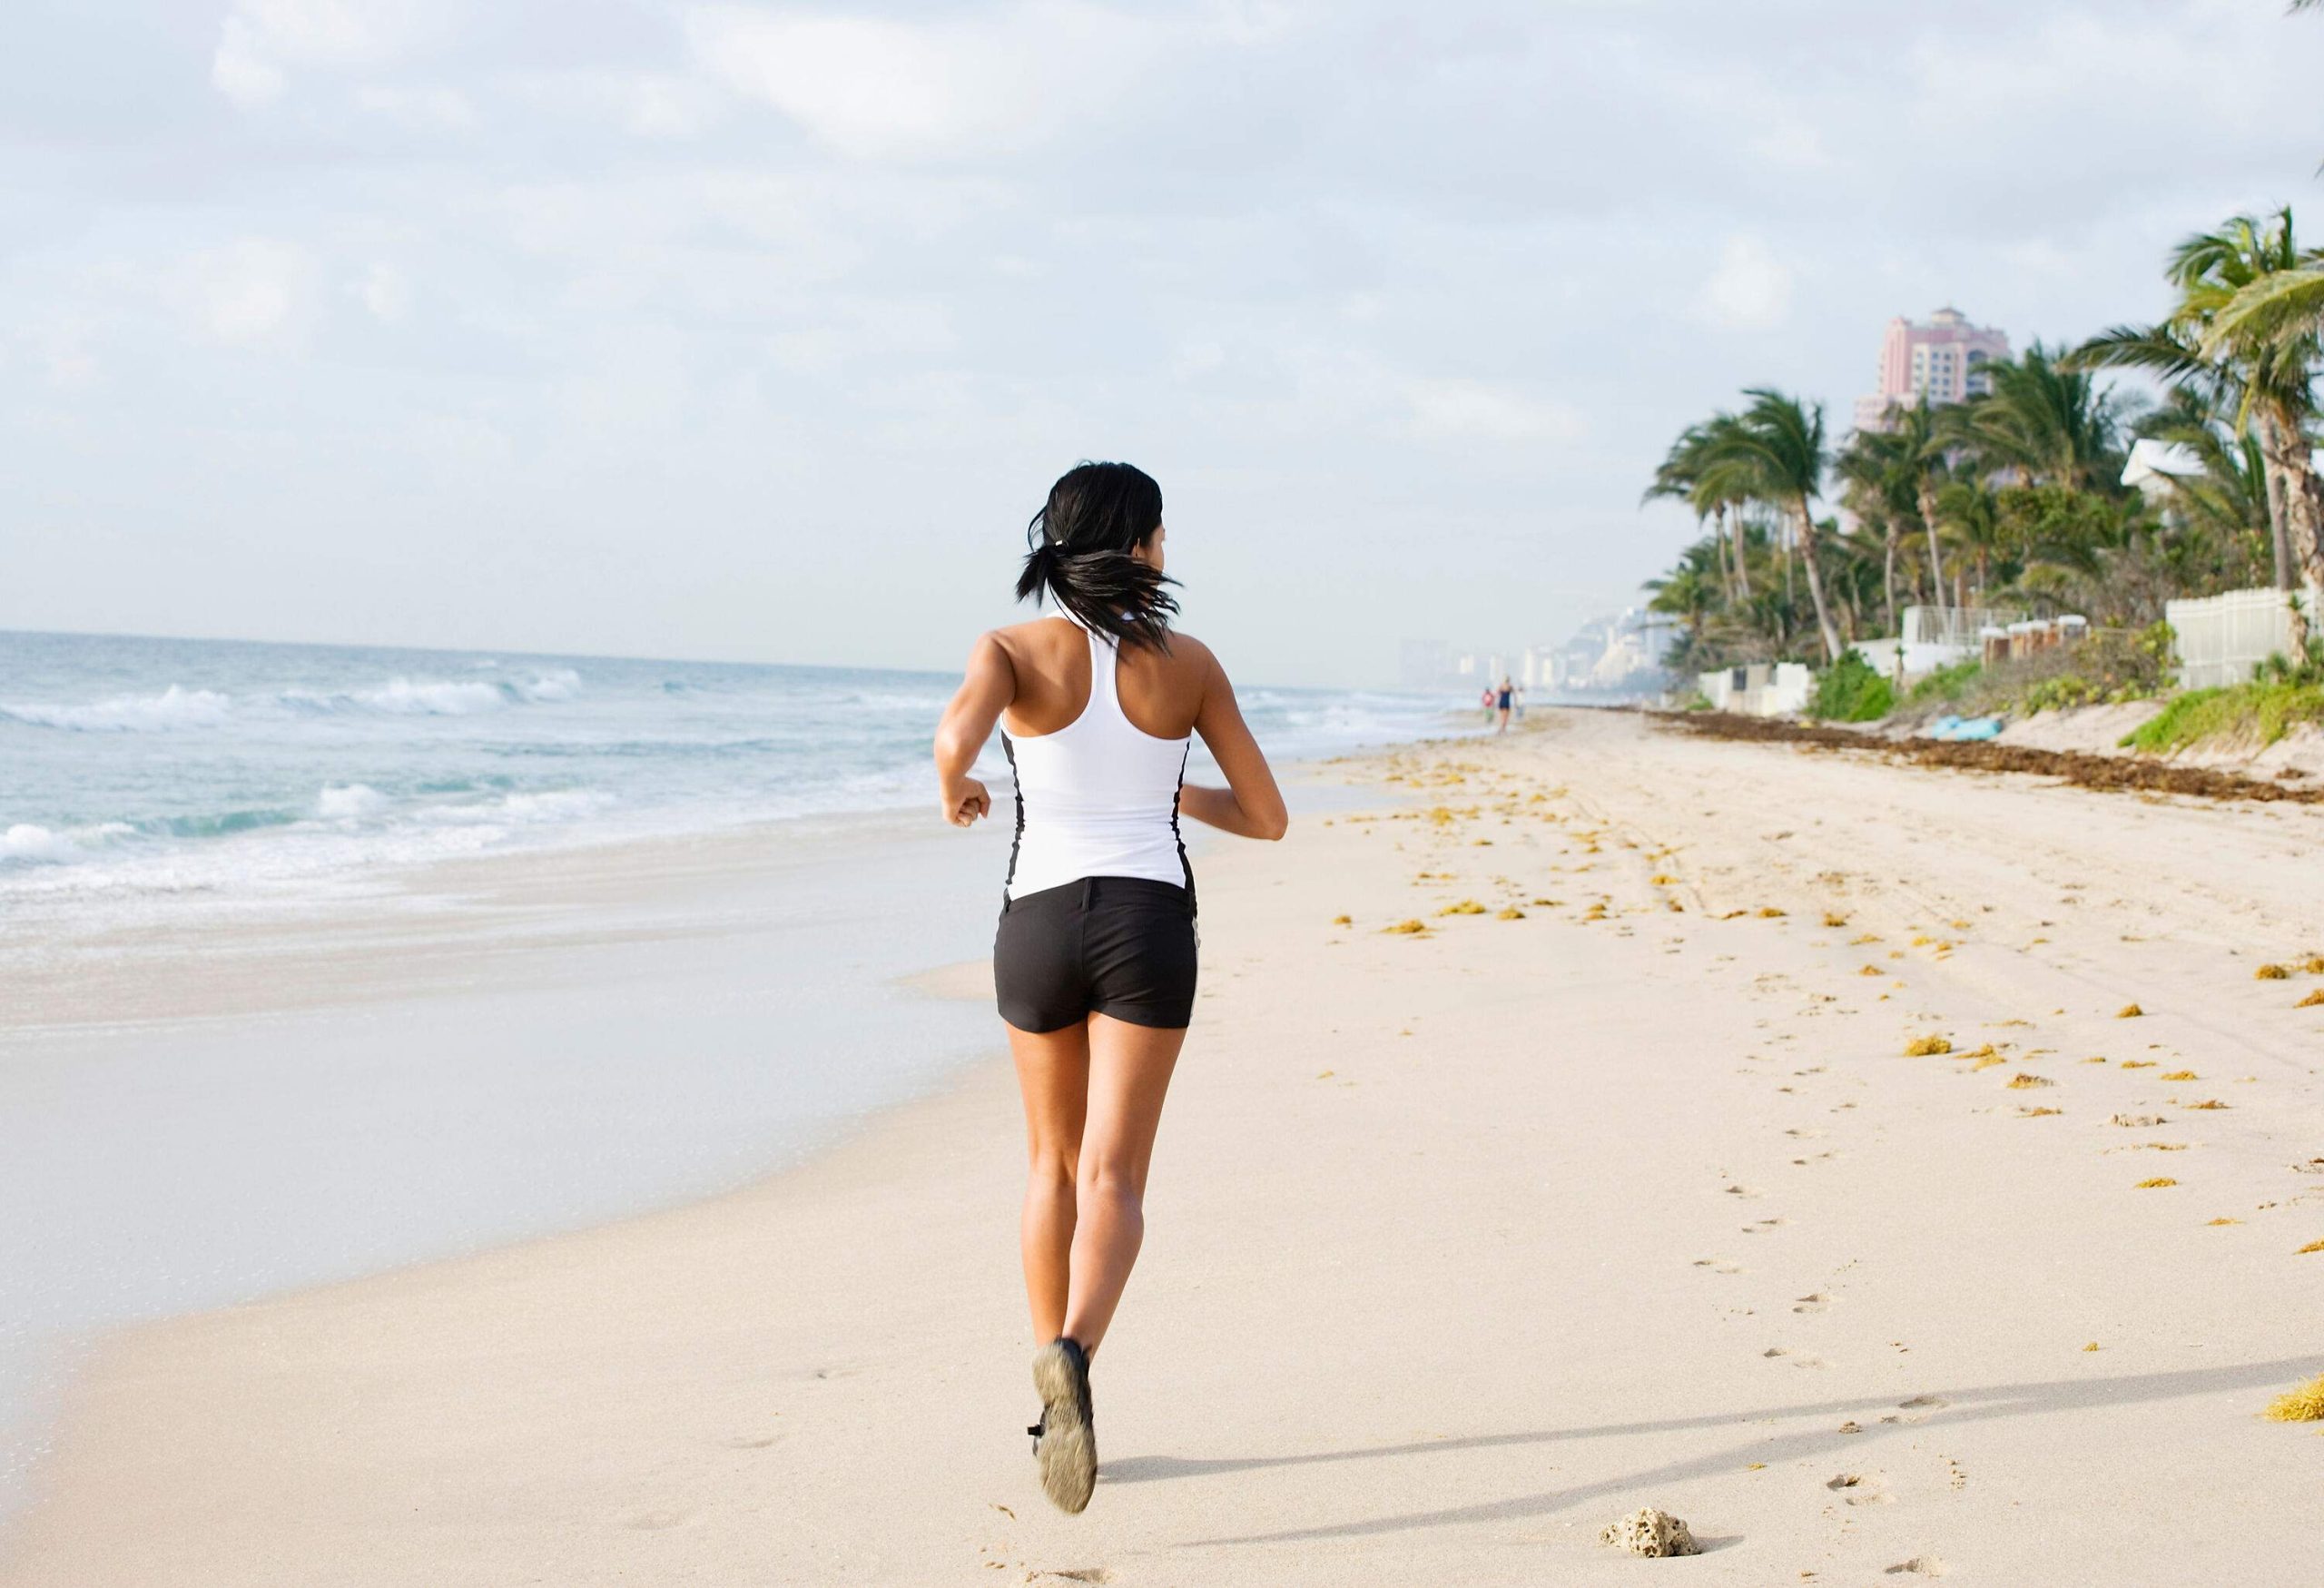 A woman in sportswear runs across a beach along a grove of palm trees.